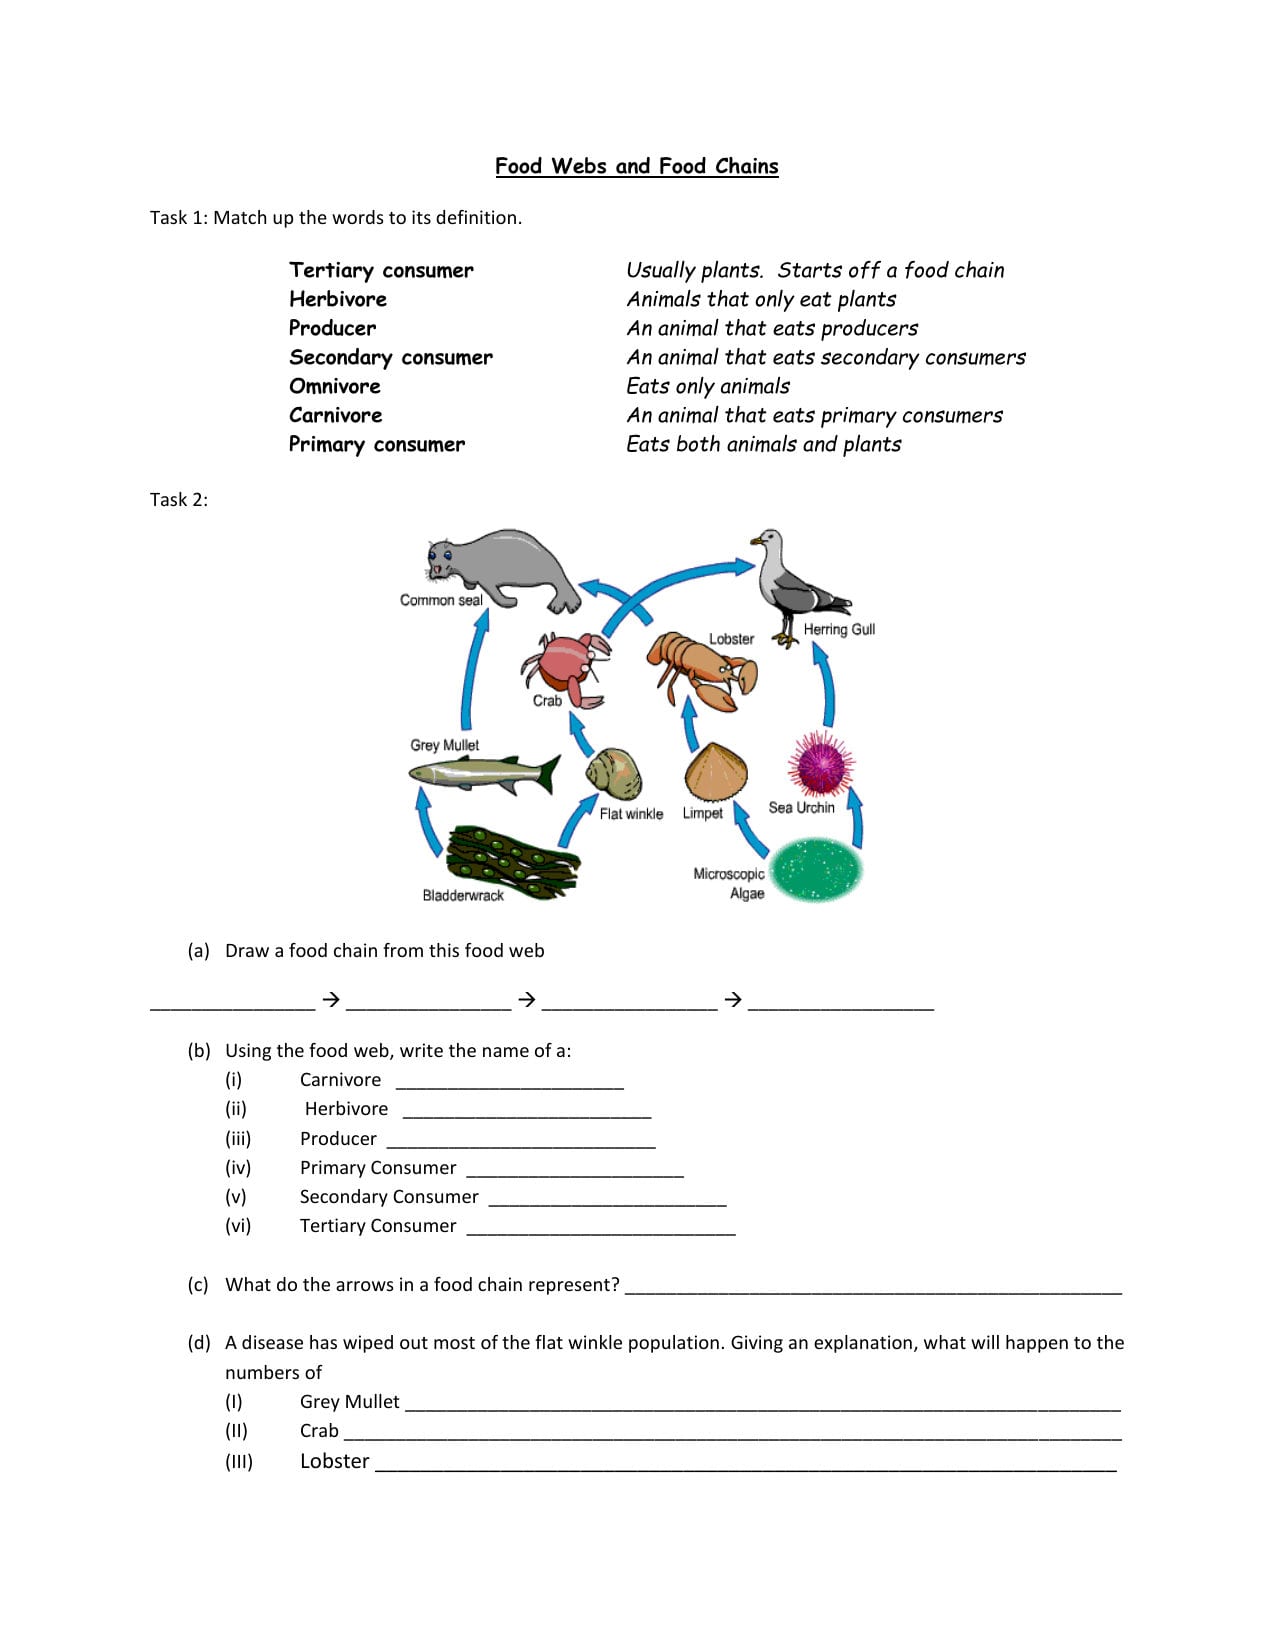 Food Chains And Webs Worksheet Regarding Draw A Food Web Worksheet